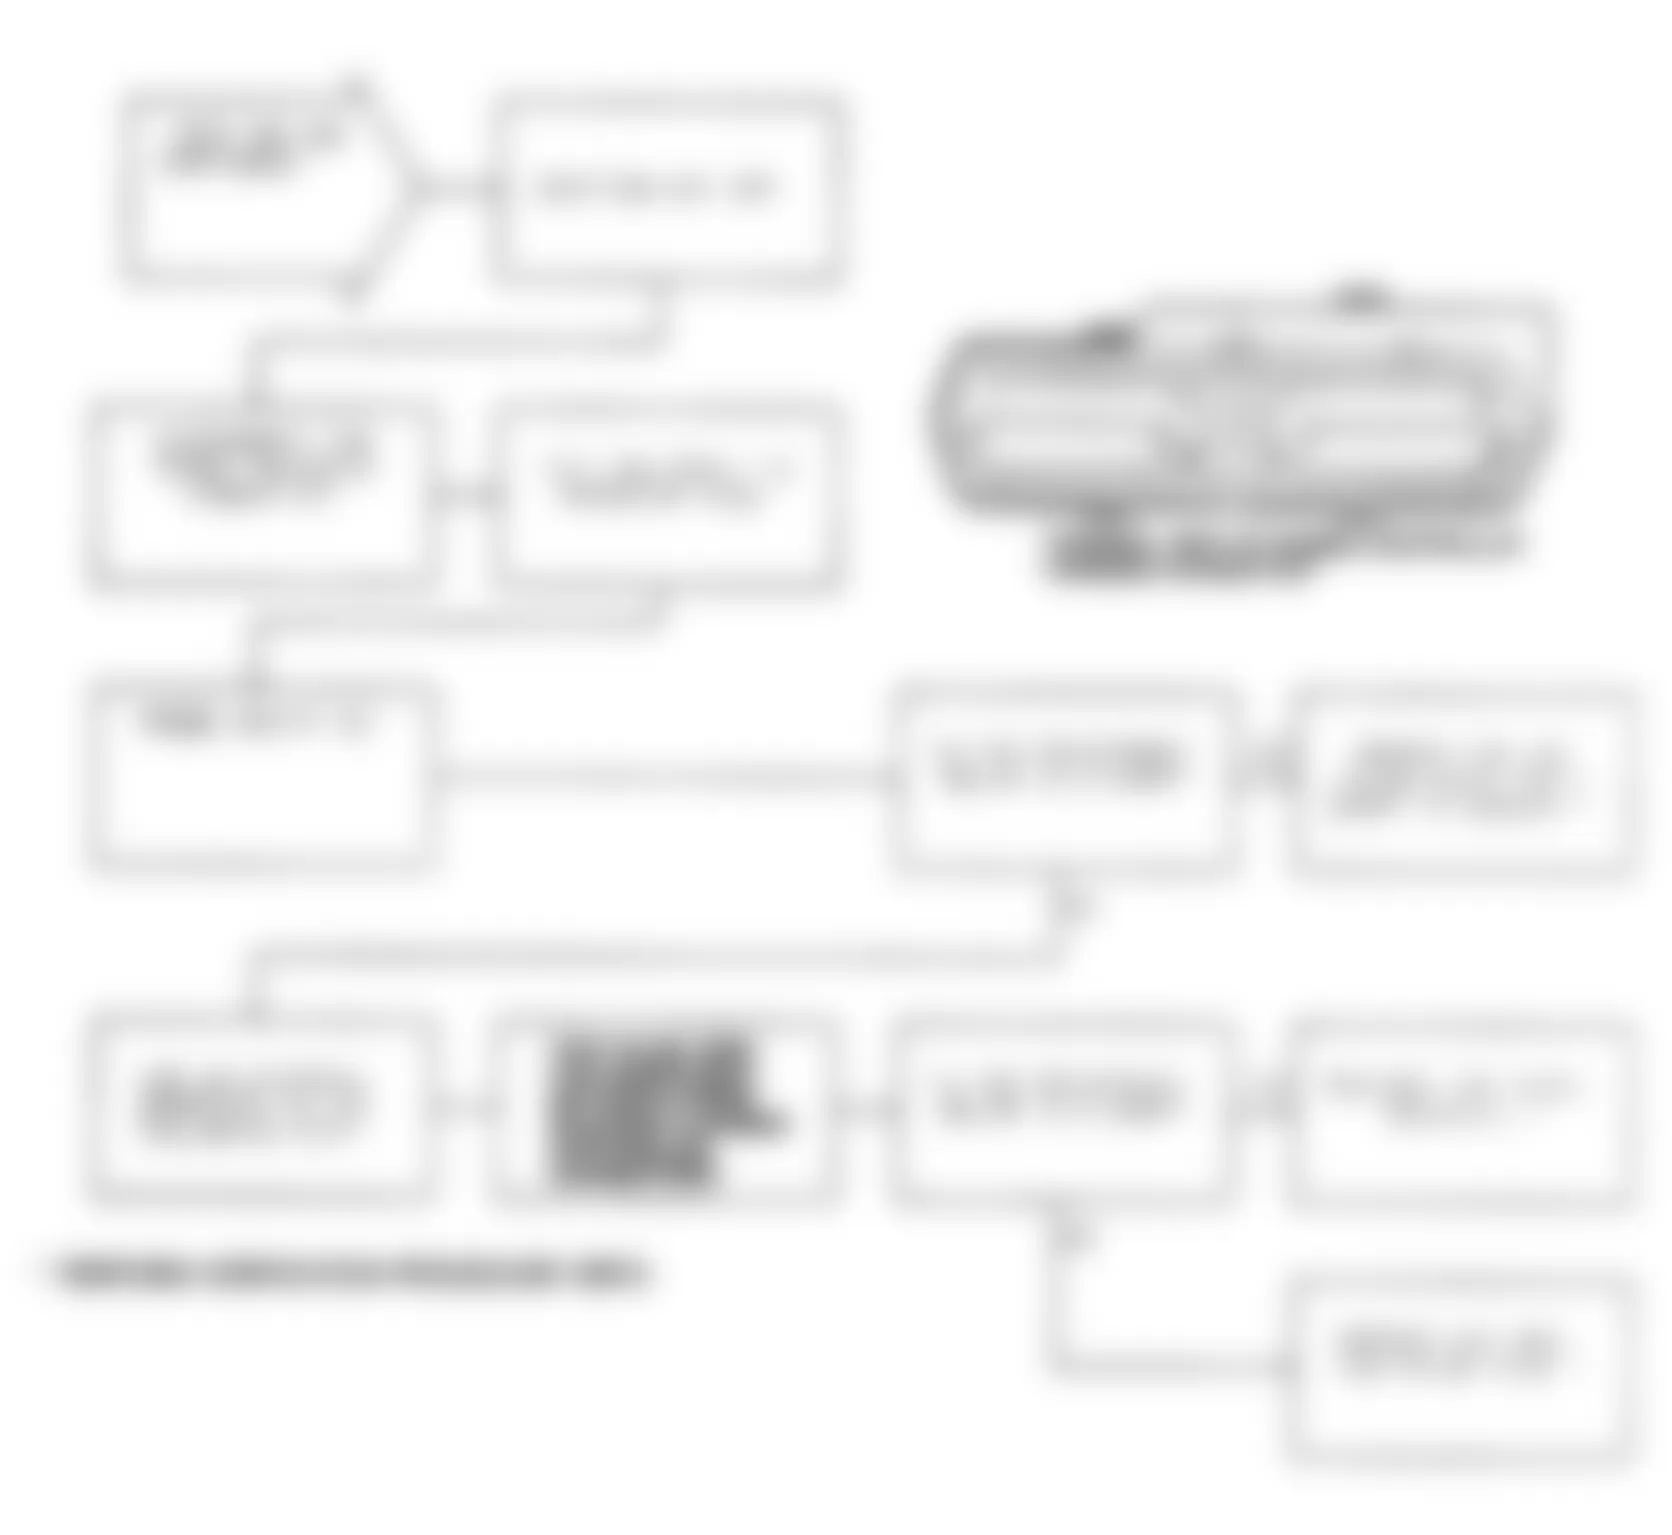 Chrysler LeBaron GTC 1991 - Component Locations -  Test DR-18A Code 31, Diagnostic Flow Chart (3 of 3)